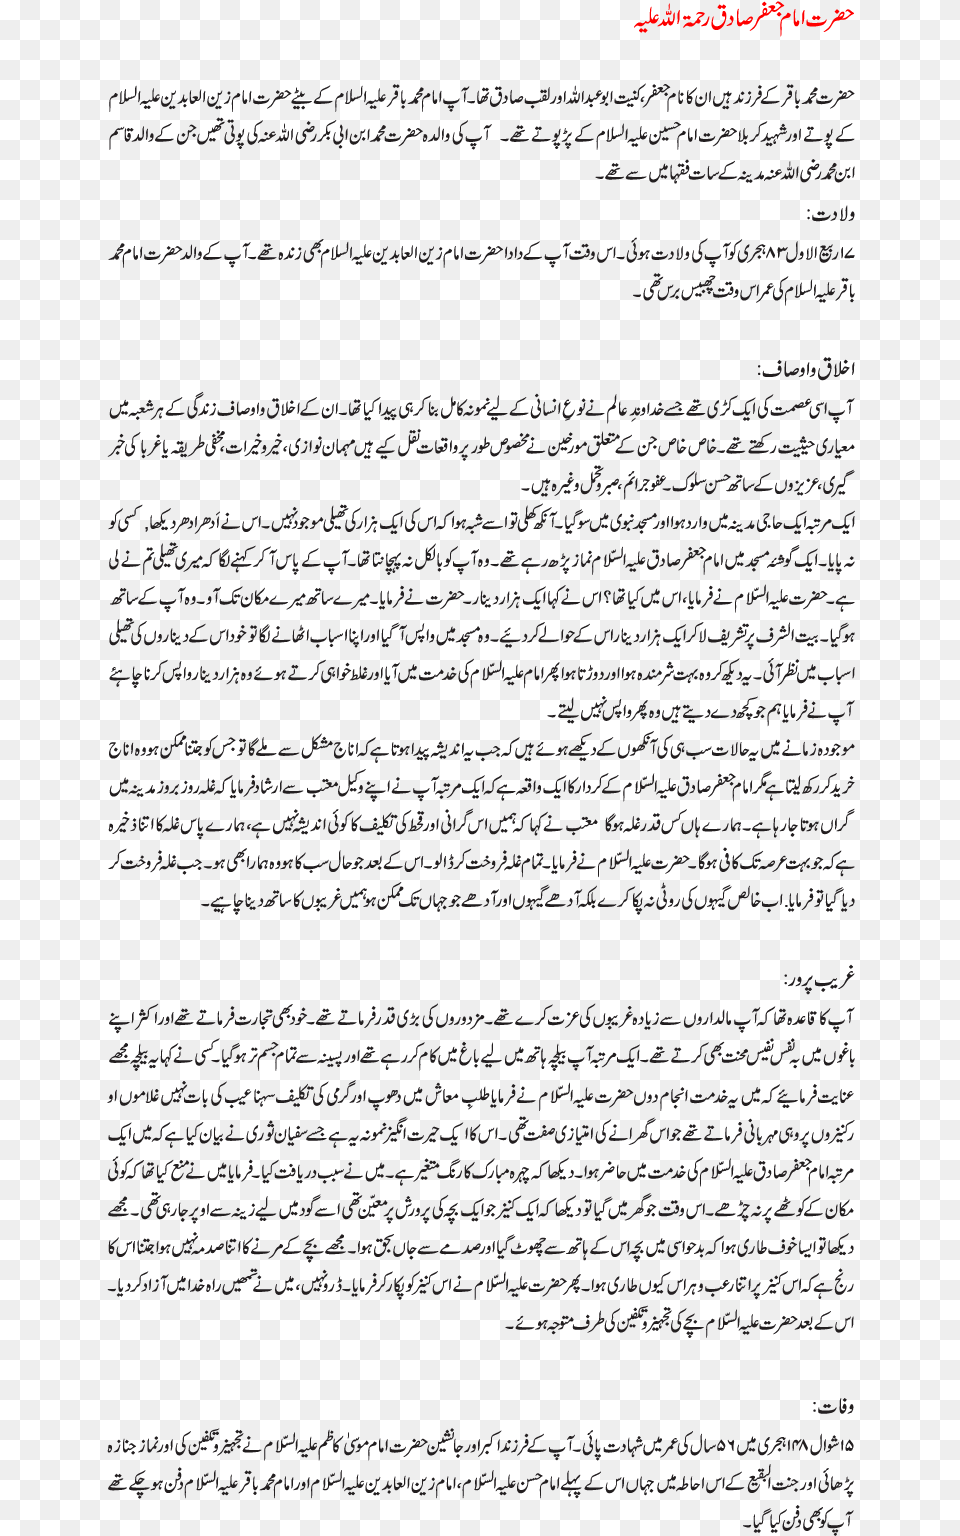 Hazrat Imam Jafar Sadiq R White Cane Day In Urdu, Blackboard, Texture, Text Free Png Download